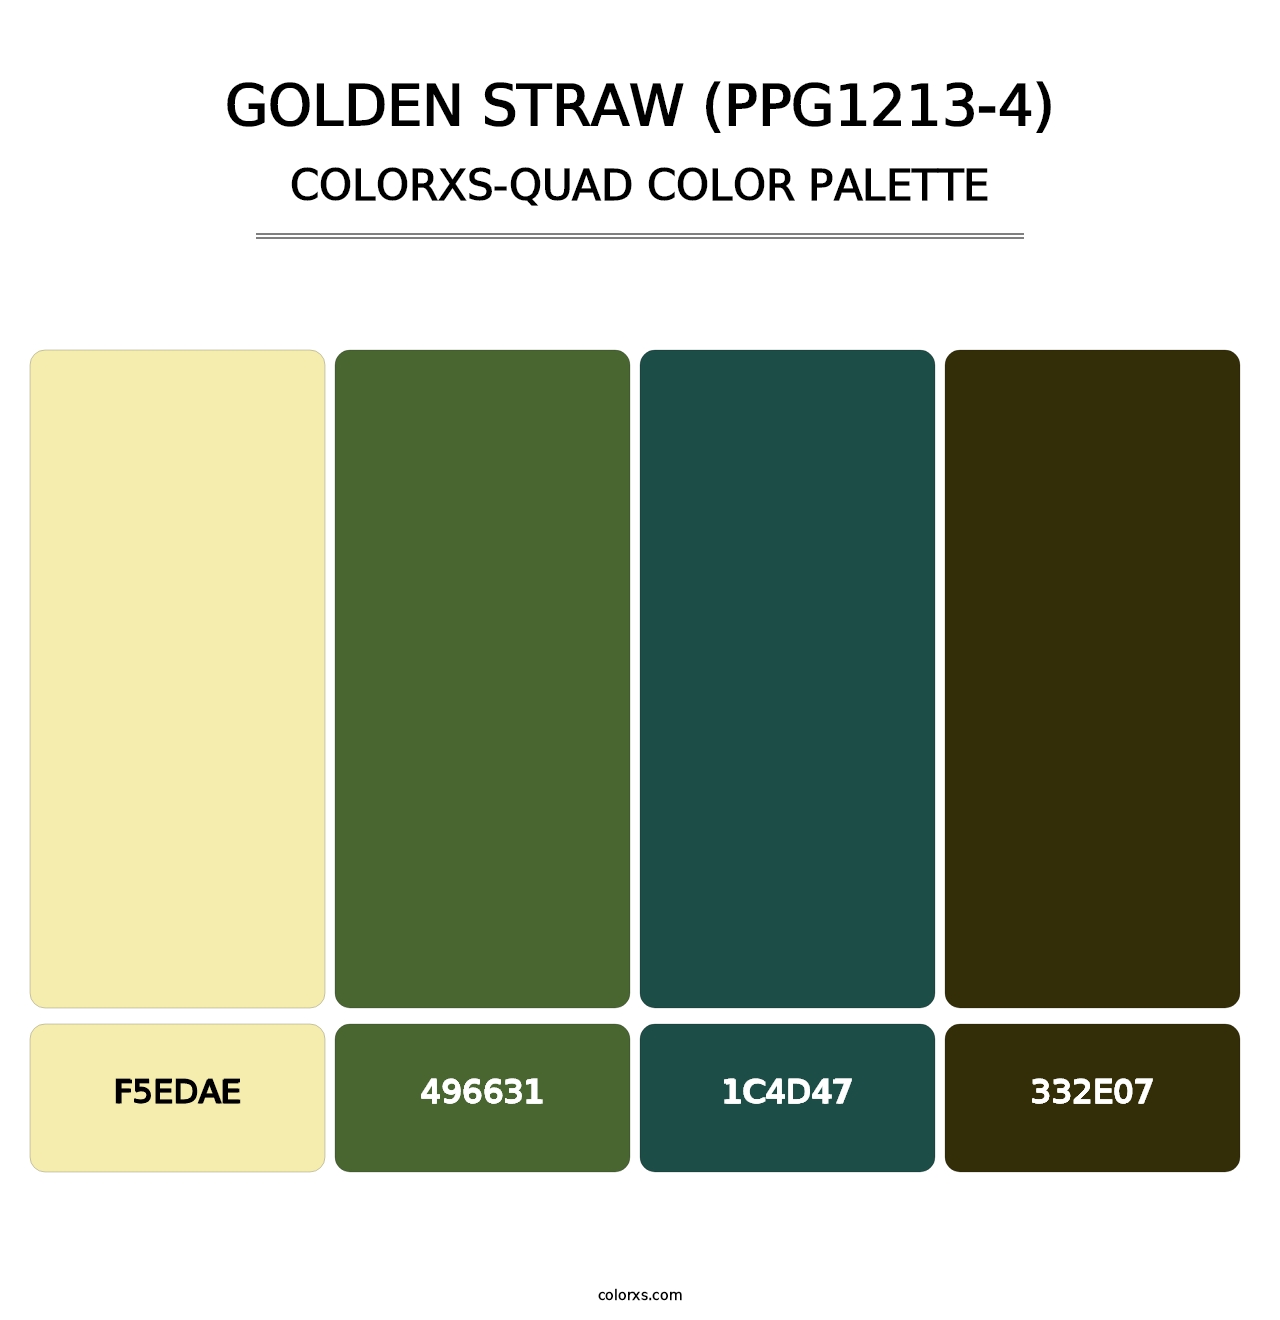 Golden Straw (PPG1213-4) - Colorxs Quad Palette